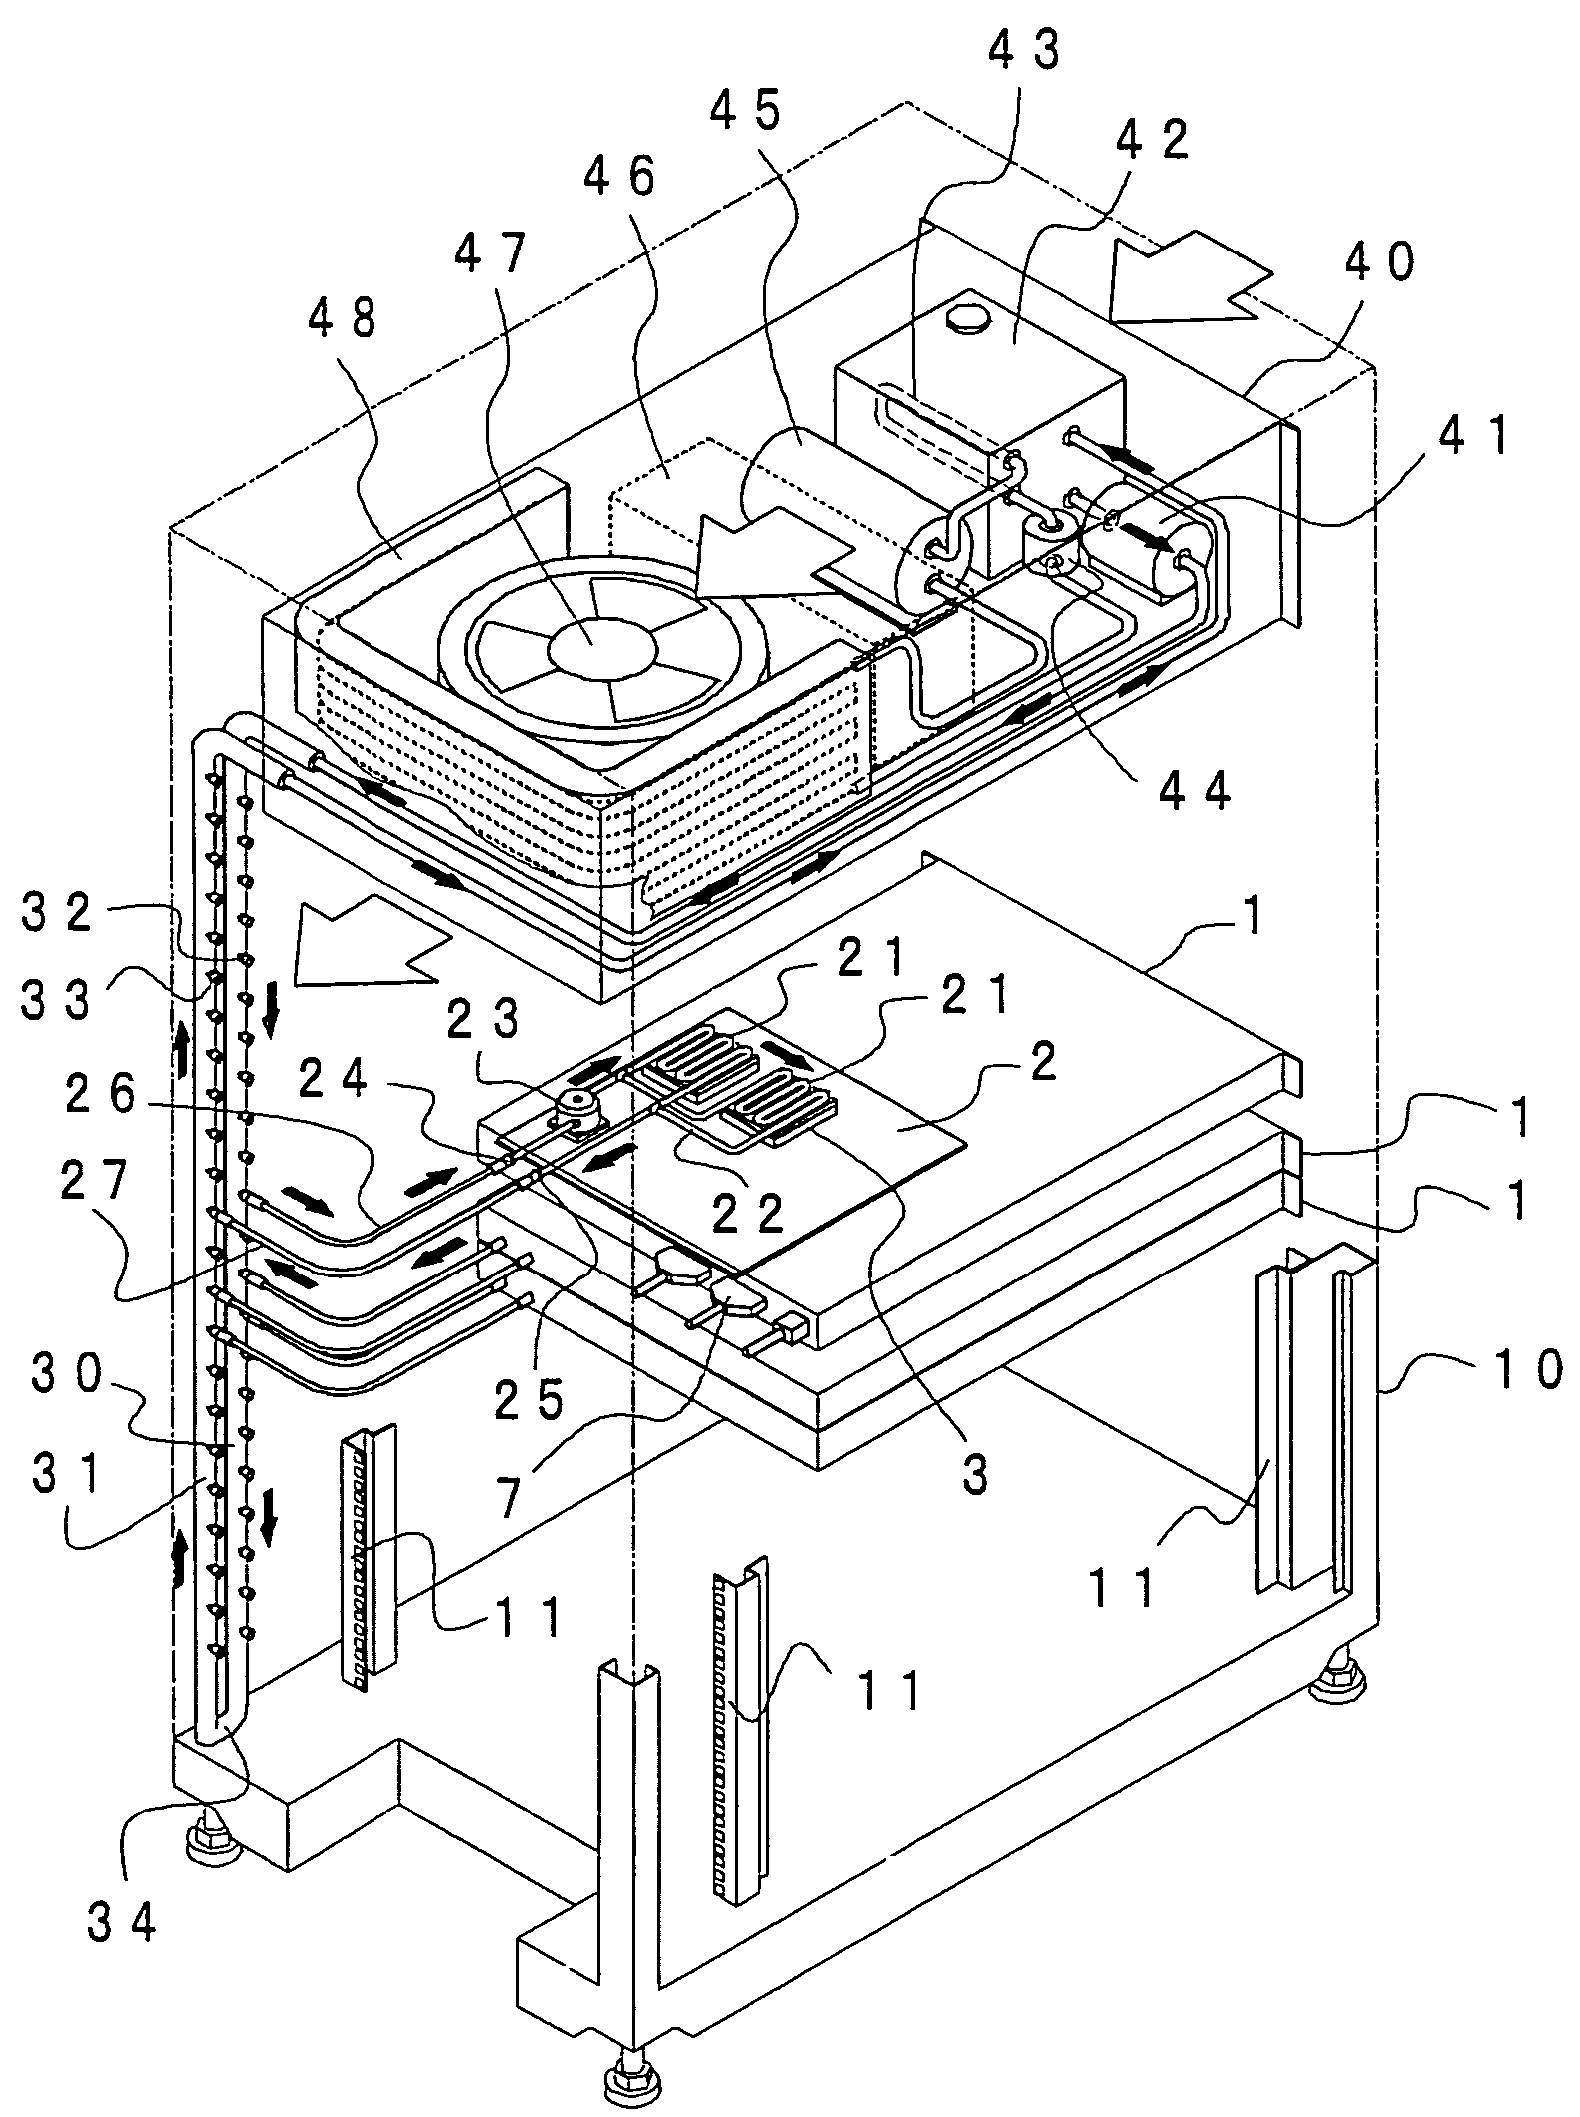 Liquid cooling system for a rack-mount server system